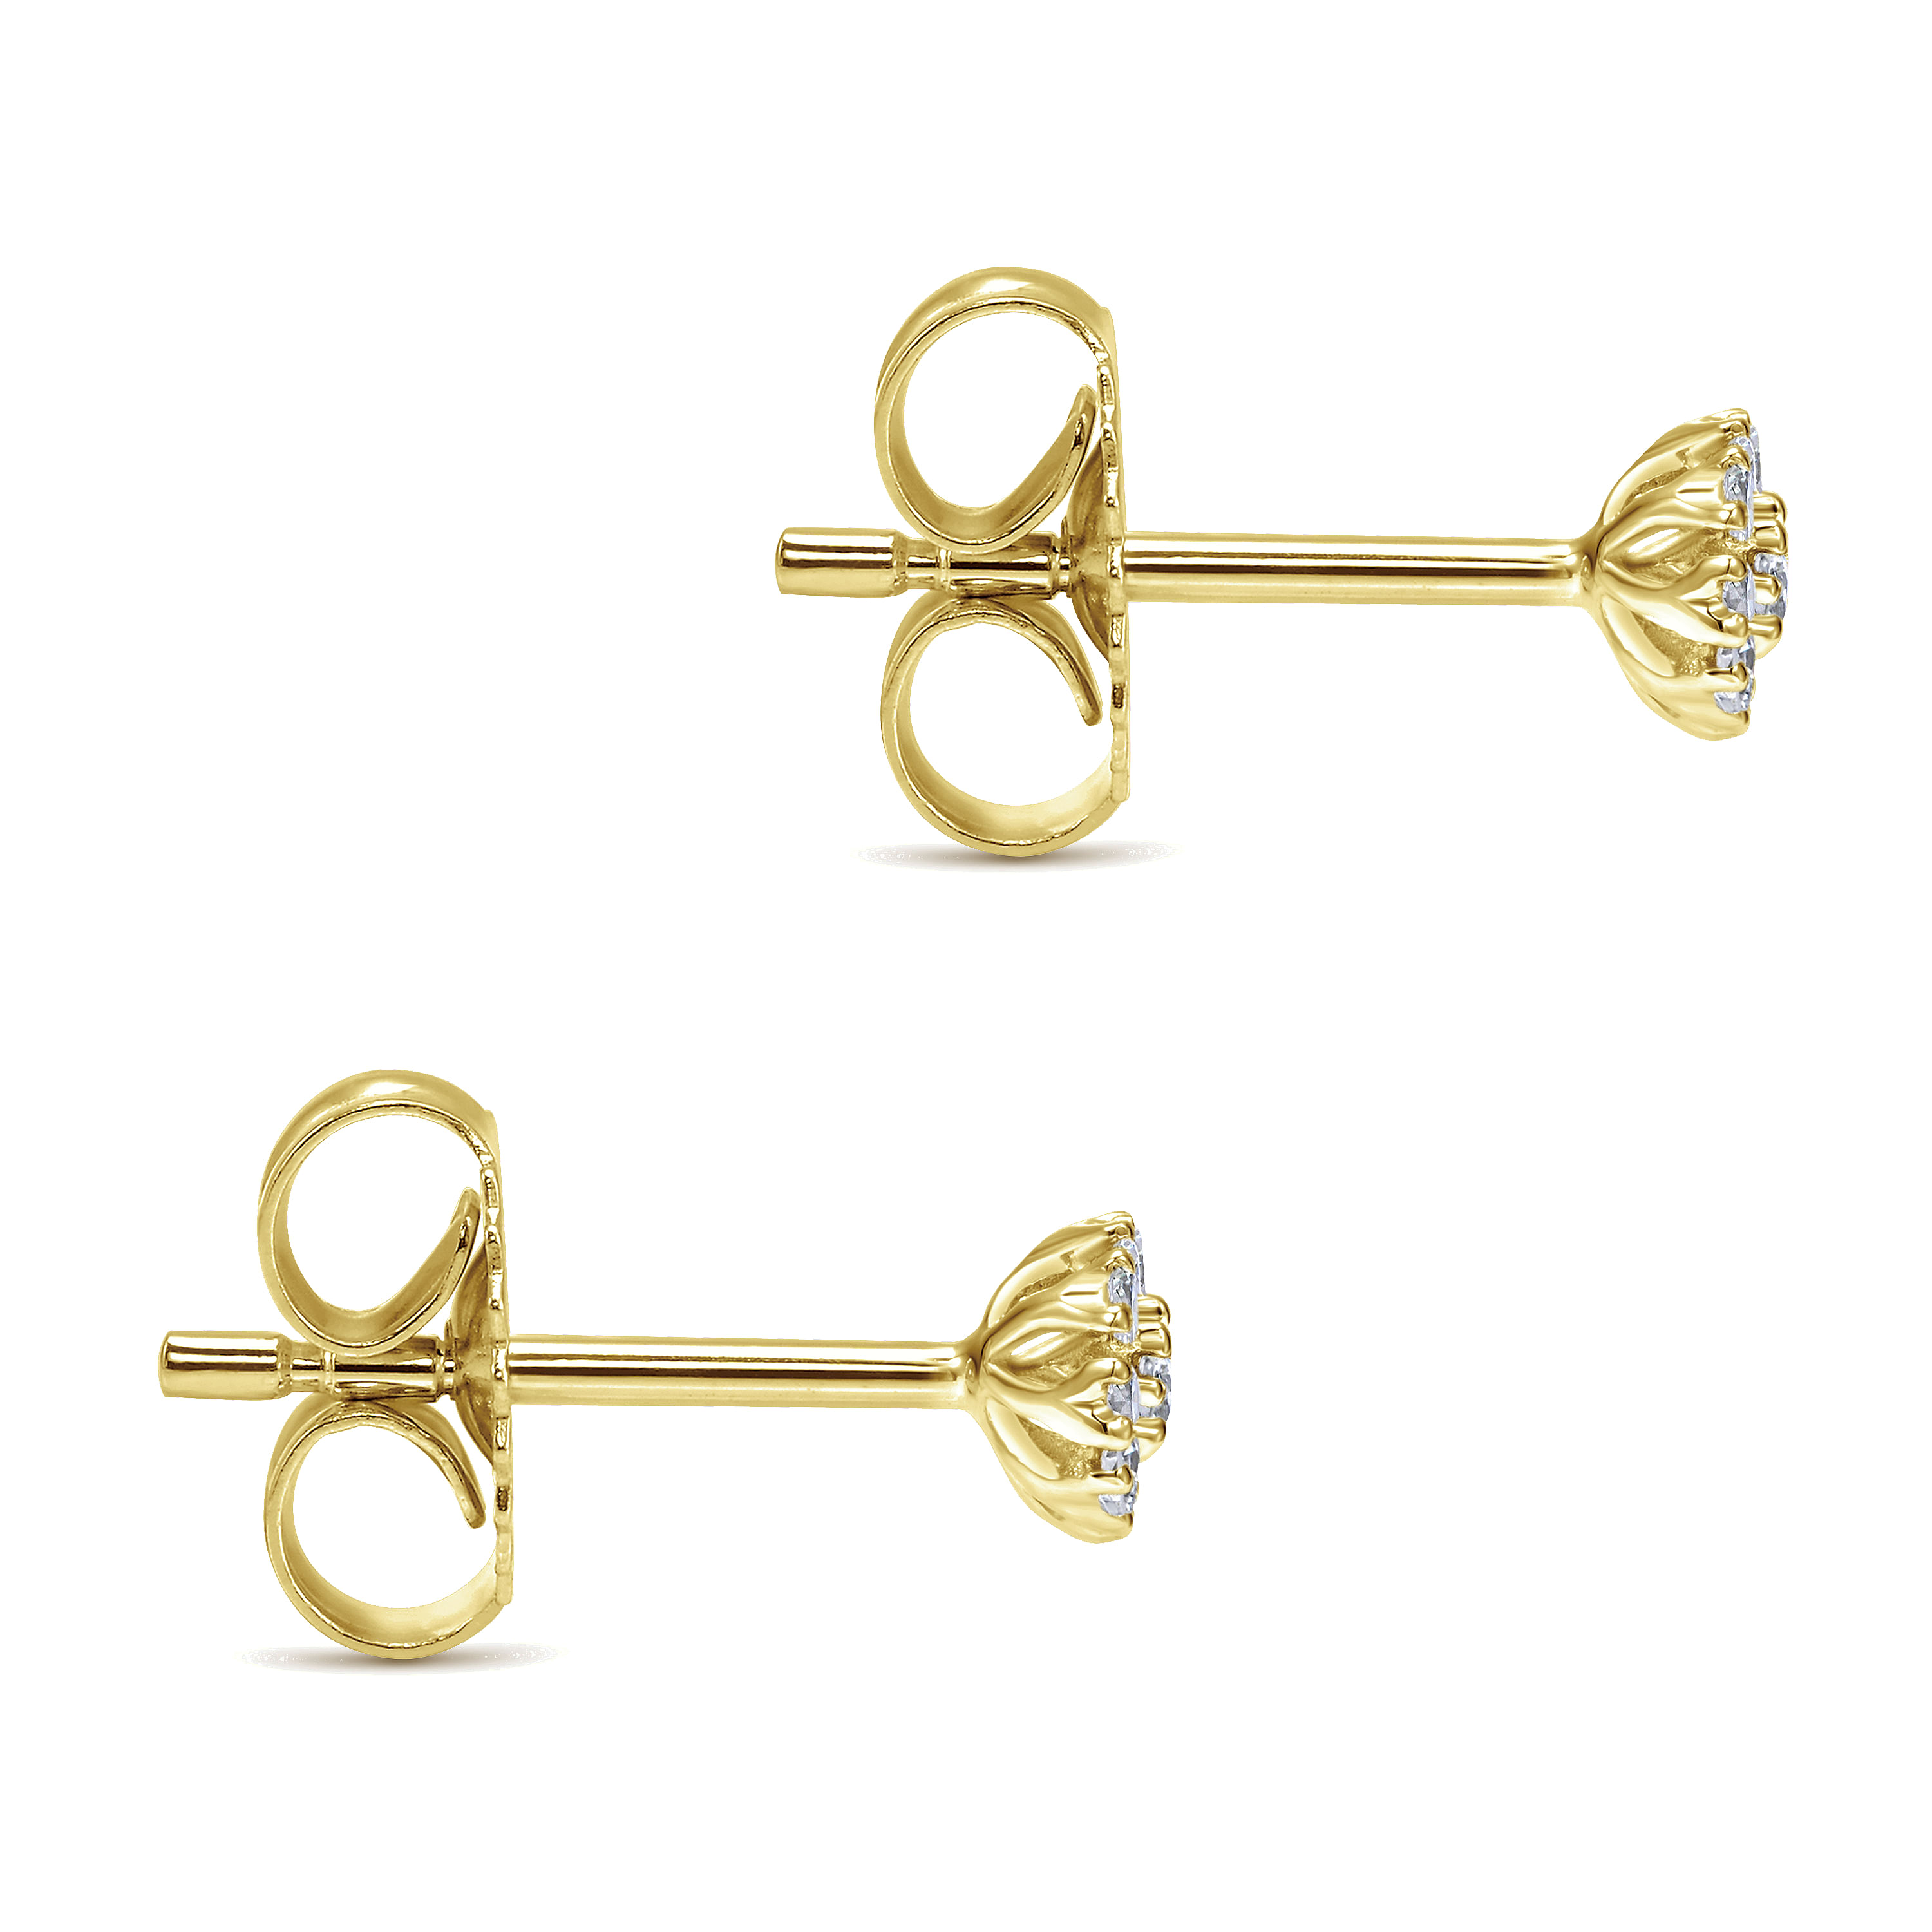 14K Yellow Gold Floral Inspired Diamond Stud Earrings